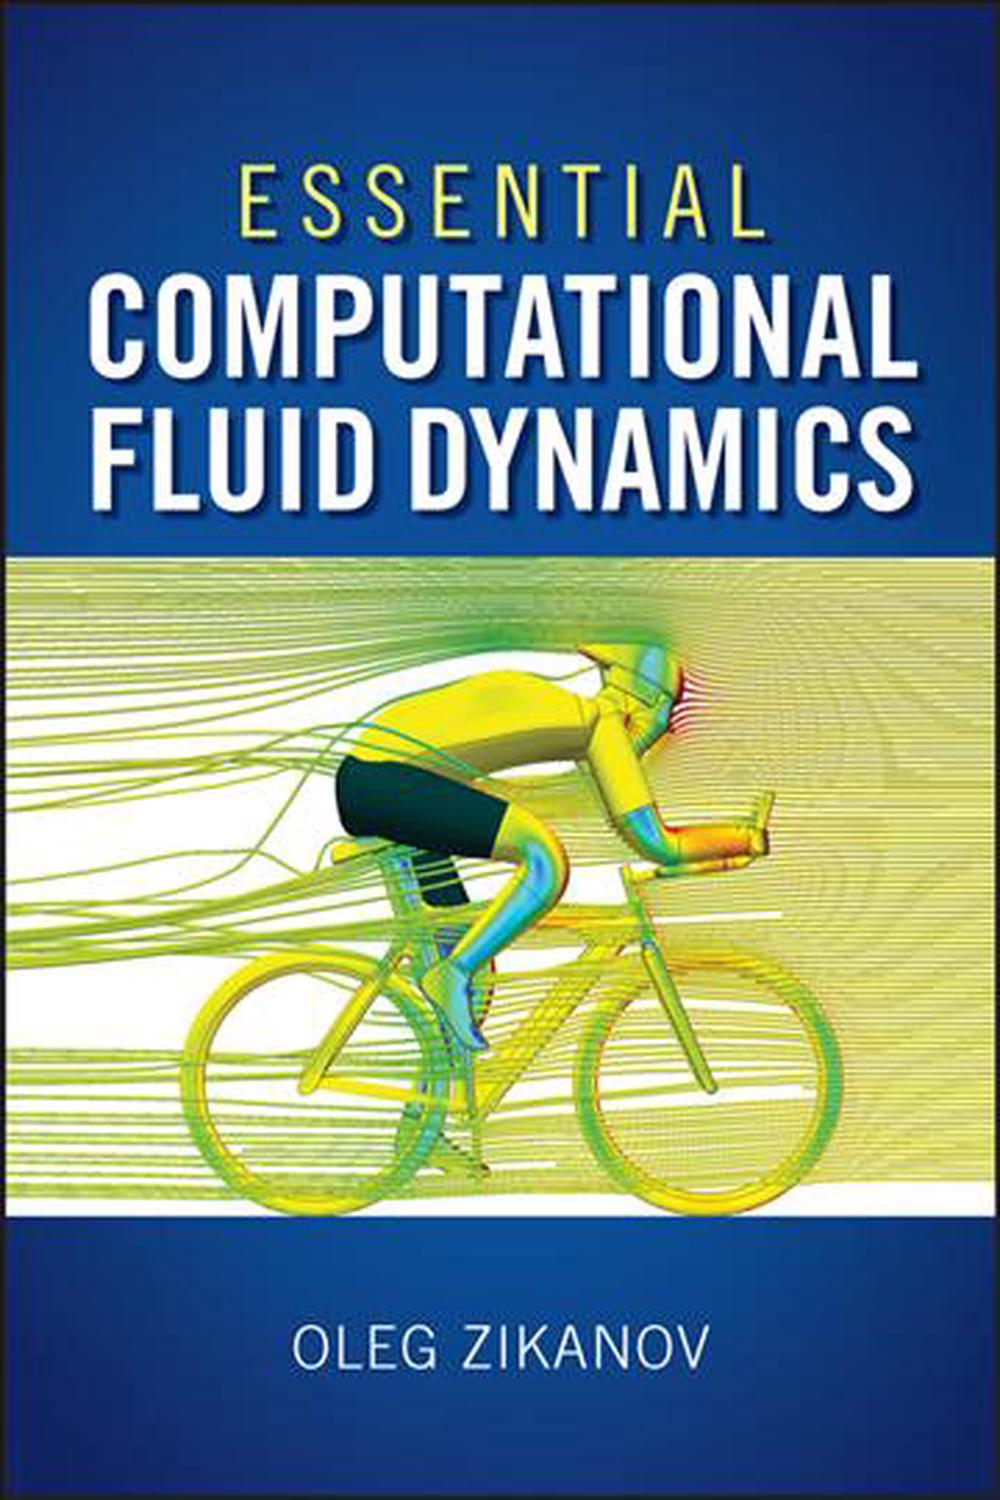 theoretical and computational fluid dynamics